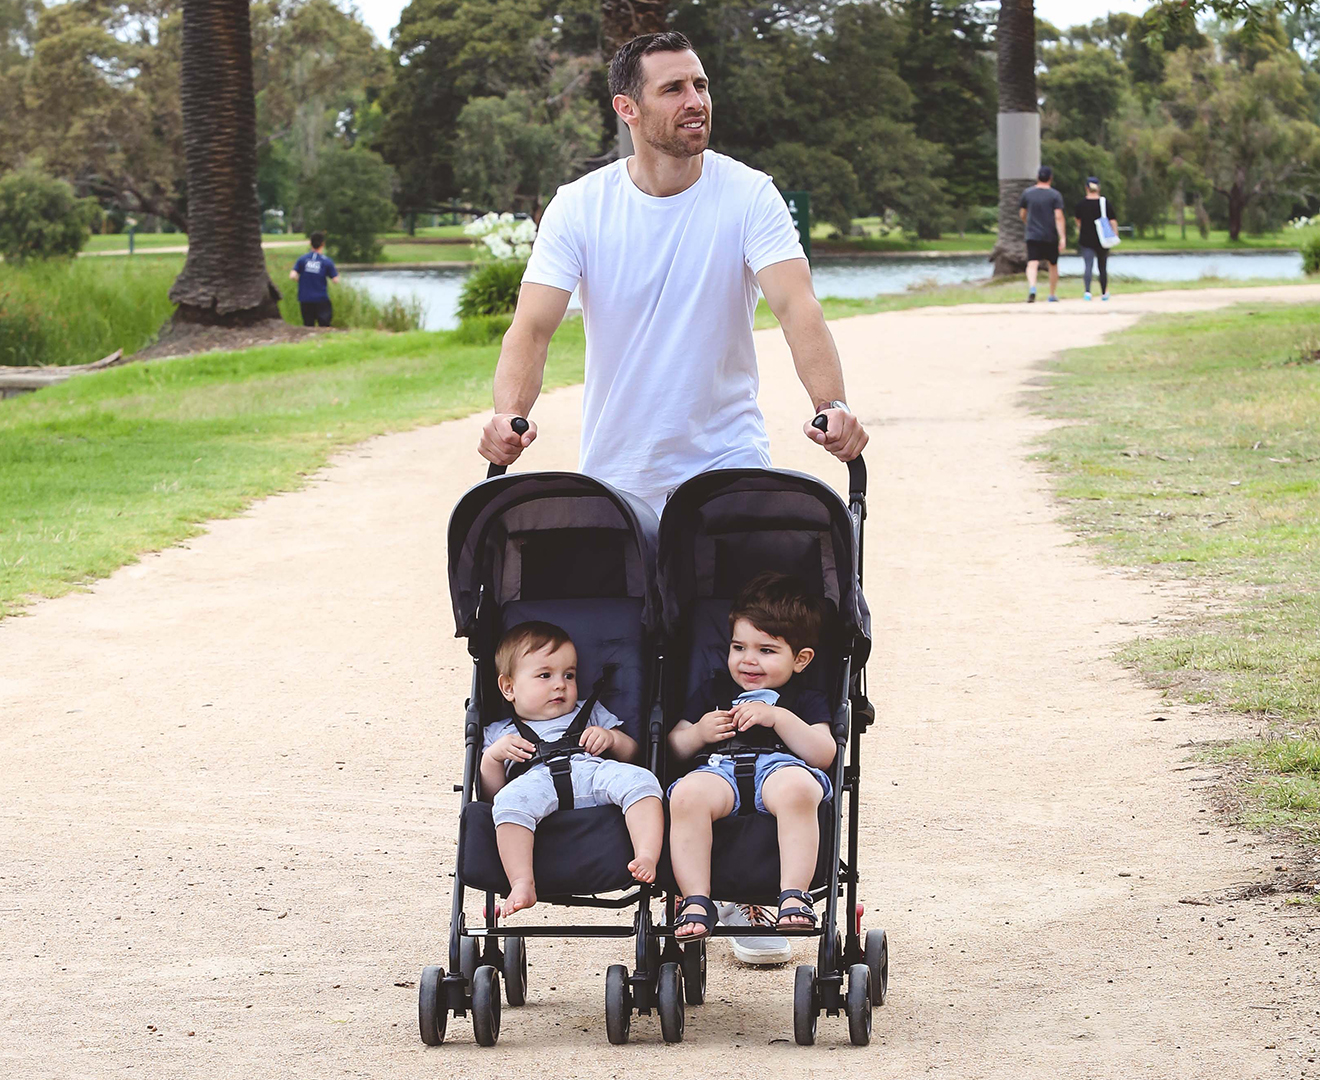 childcare twin nix stroller